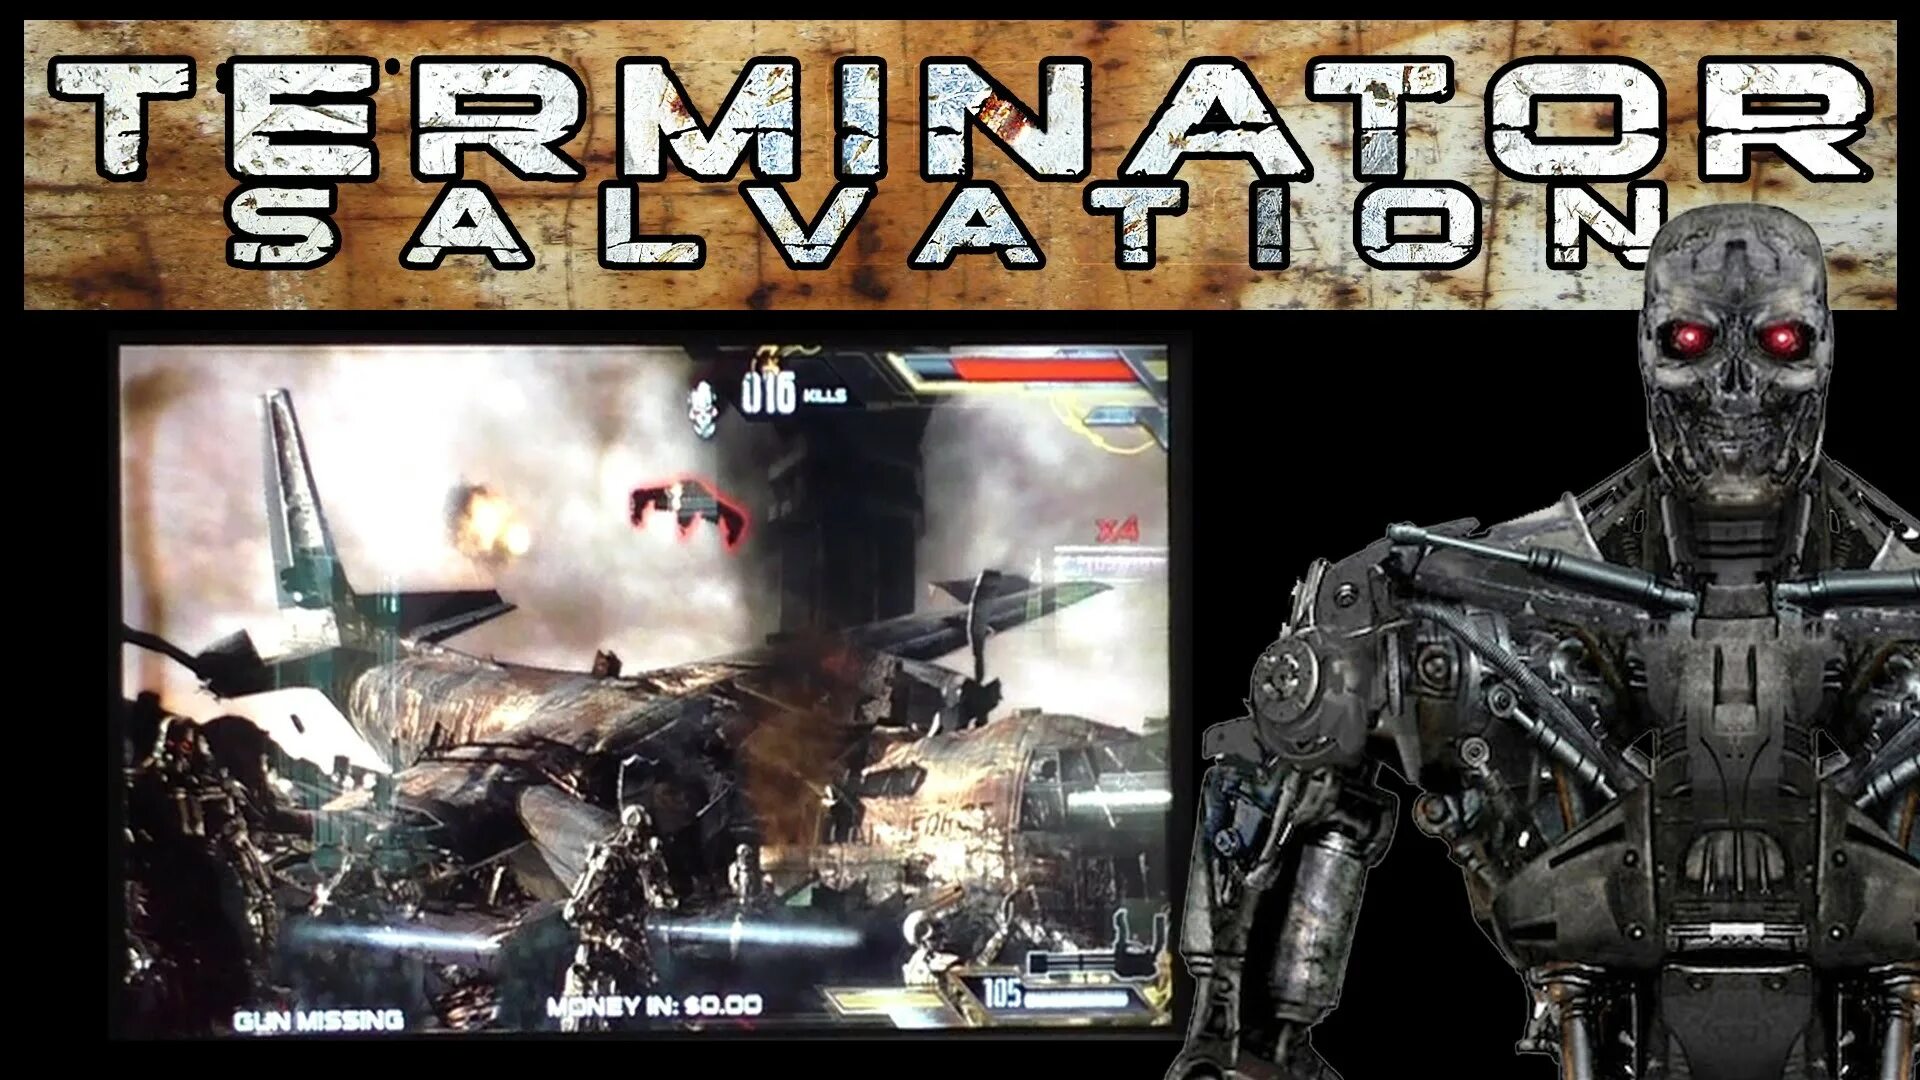 Terminator video game. Terminator Salvation (игра). Терминатор Salvation аркада. Terminator Salvation аркада. Terminator Salvation (игра) Split Screen.